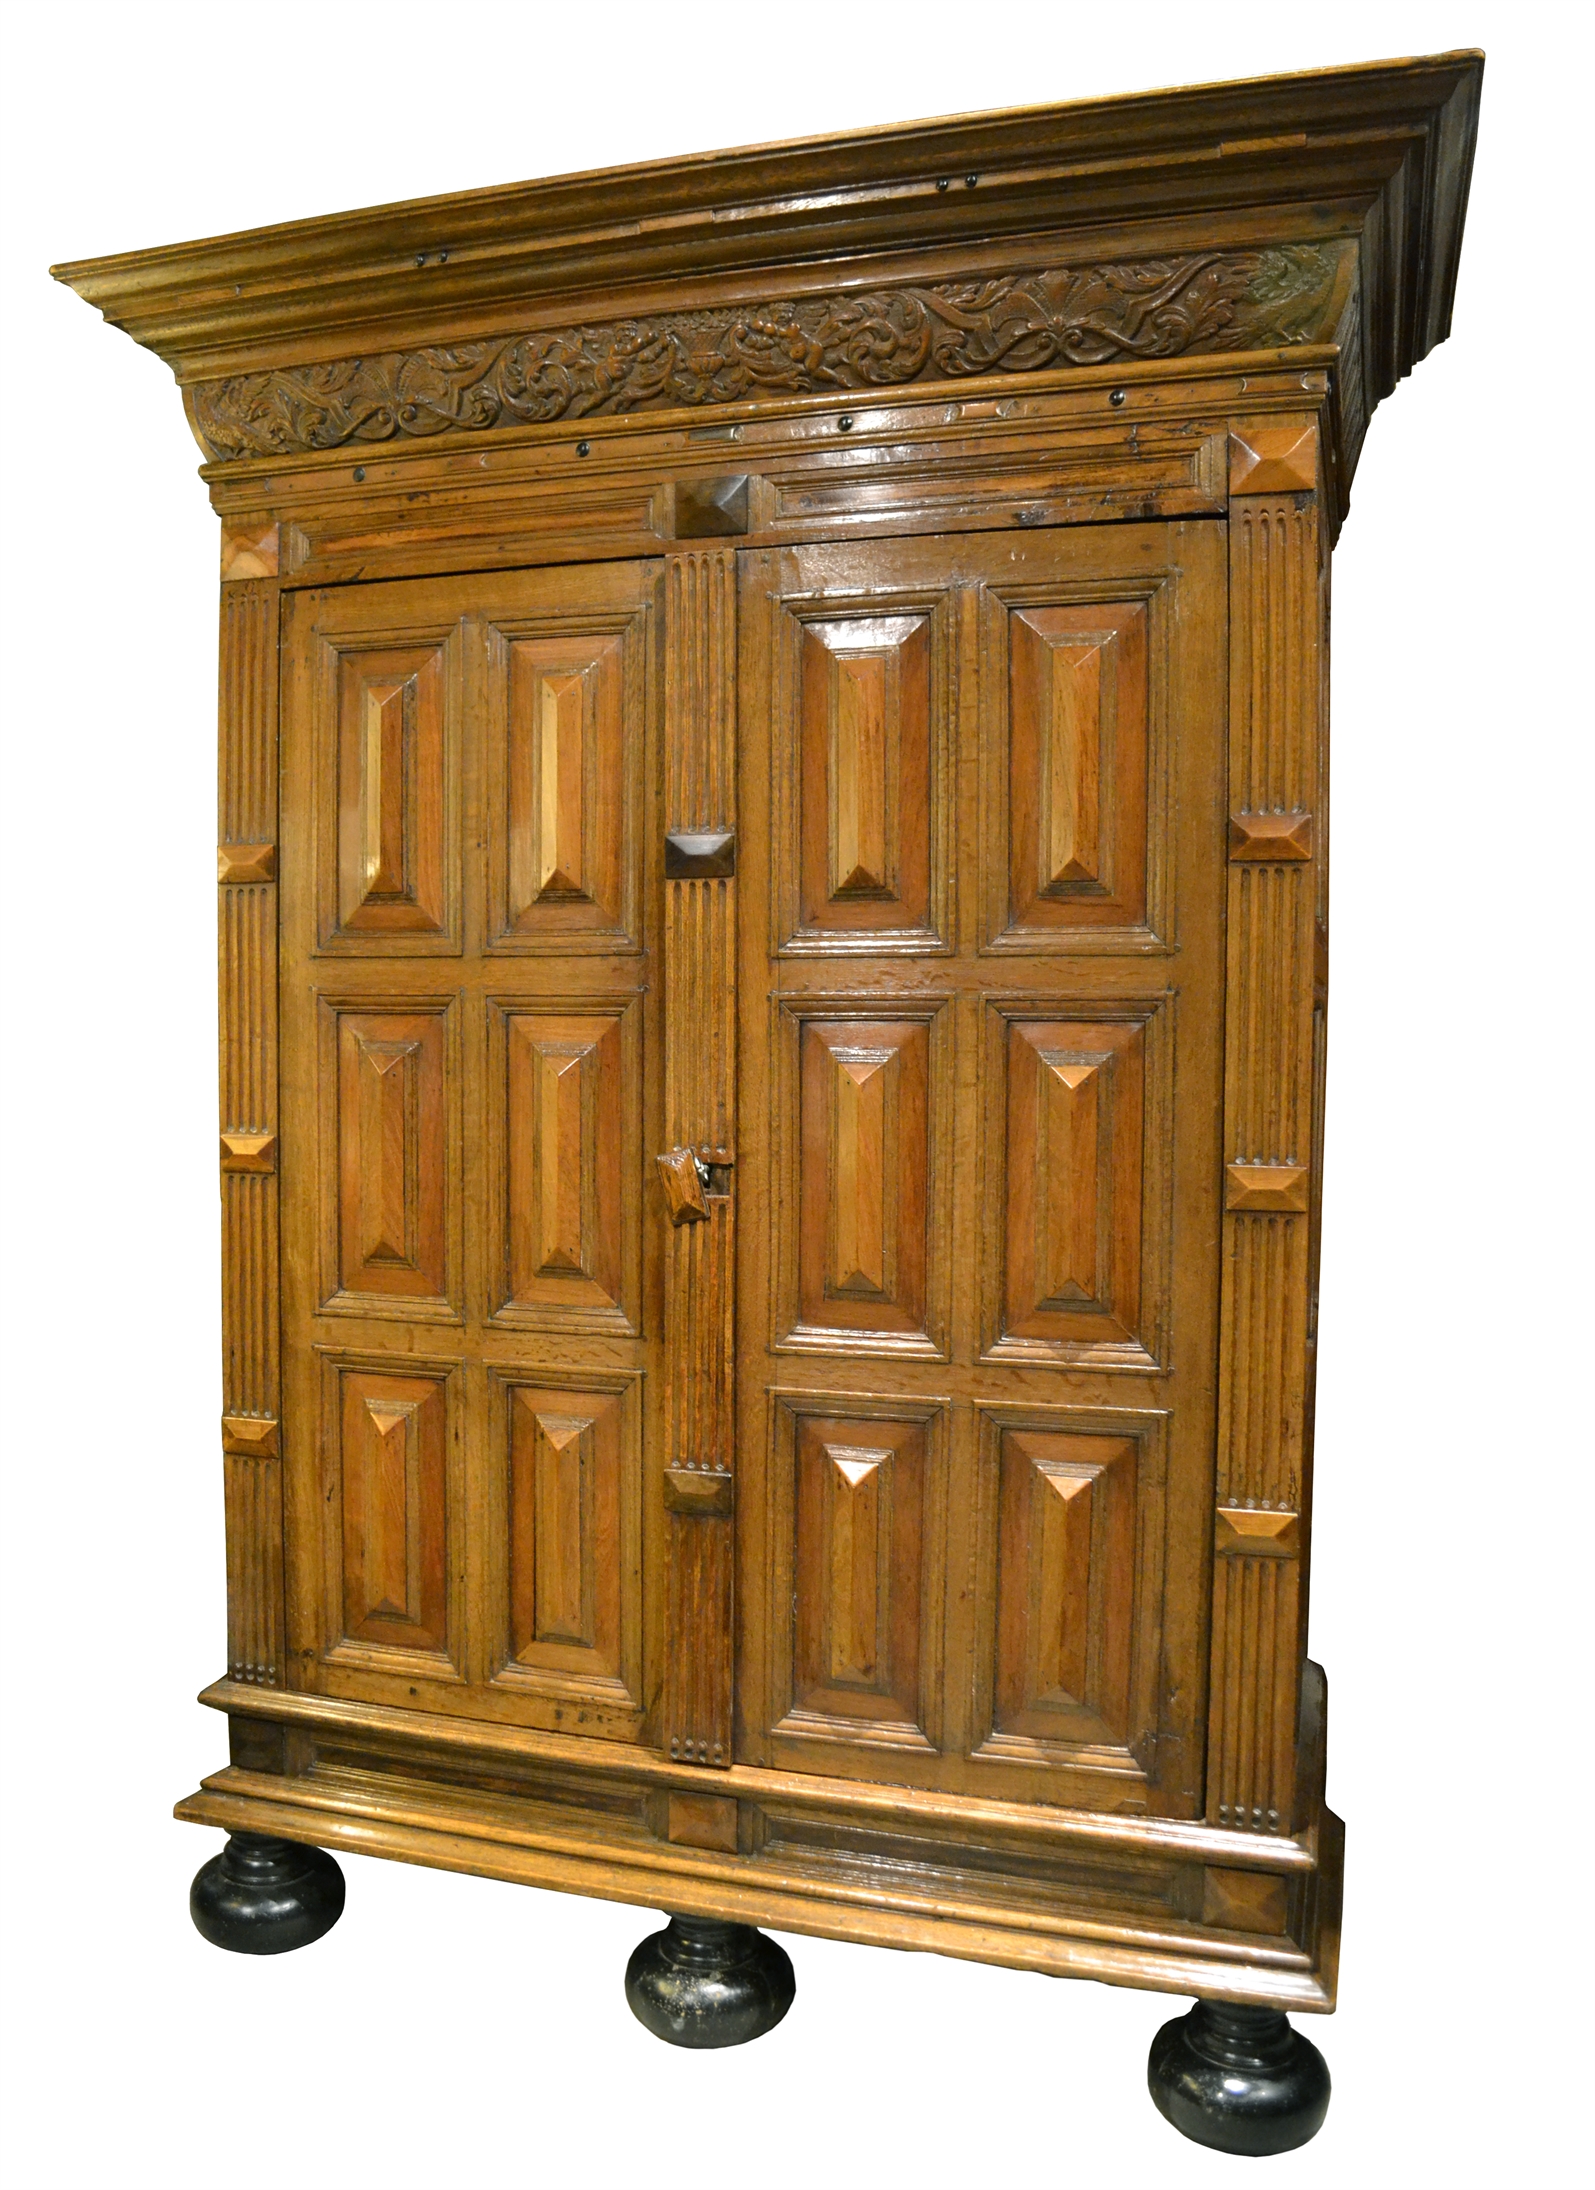 OP/2086 - Flemish Oak Cabinet with Pocket Doors